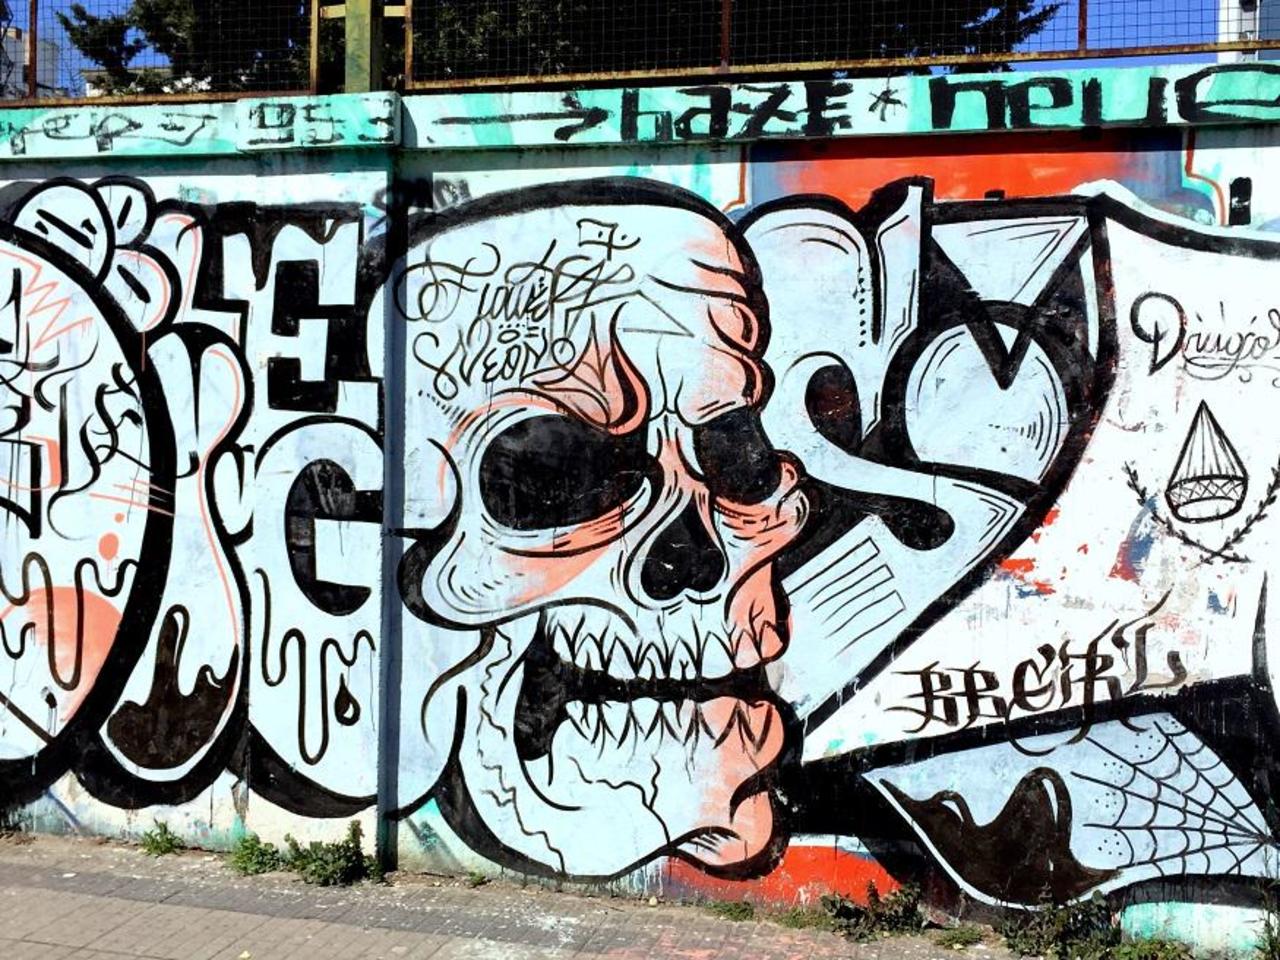 RT @DickieRandrup: #Graffiti de hoy: << Calavera >> calle 47, 9y10 #LaPlata #Argentina #StreetArt #UrbanArt #ArteUrbano  #Calavera http://t.co/p8CnsClbp0